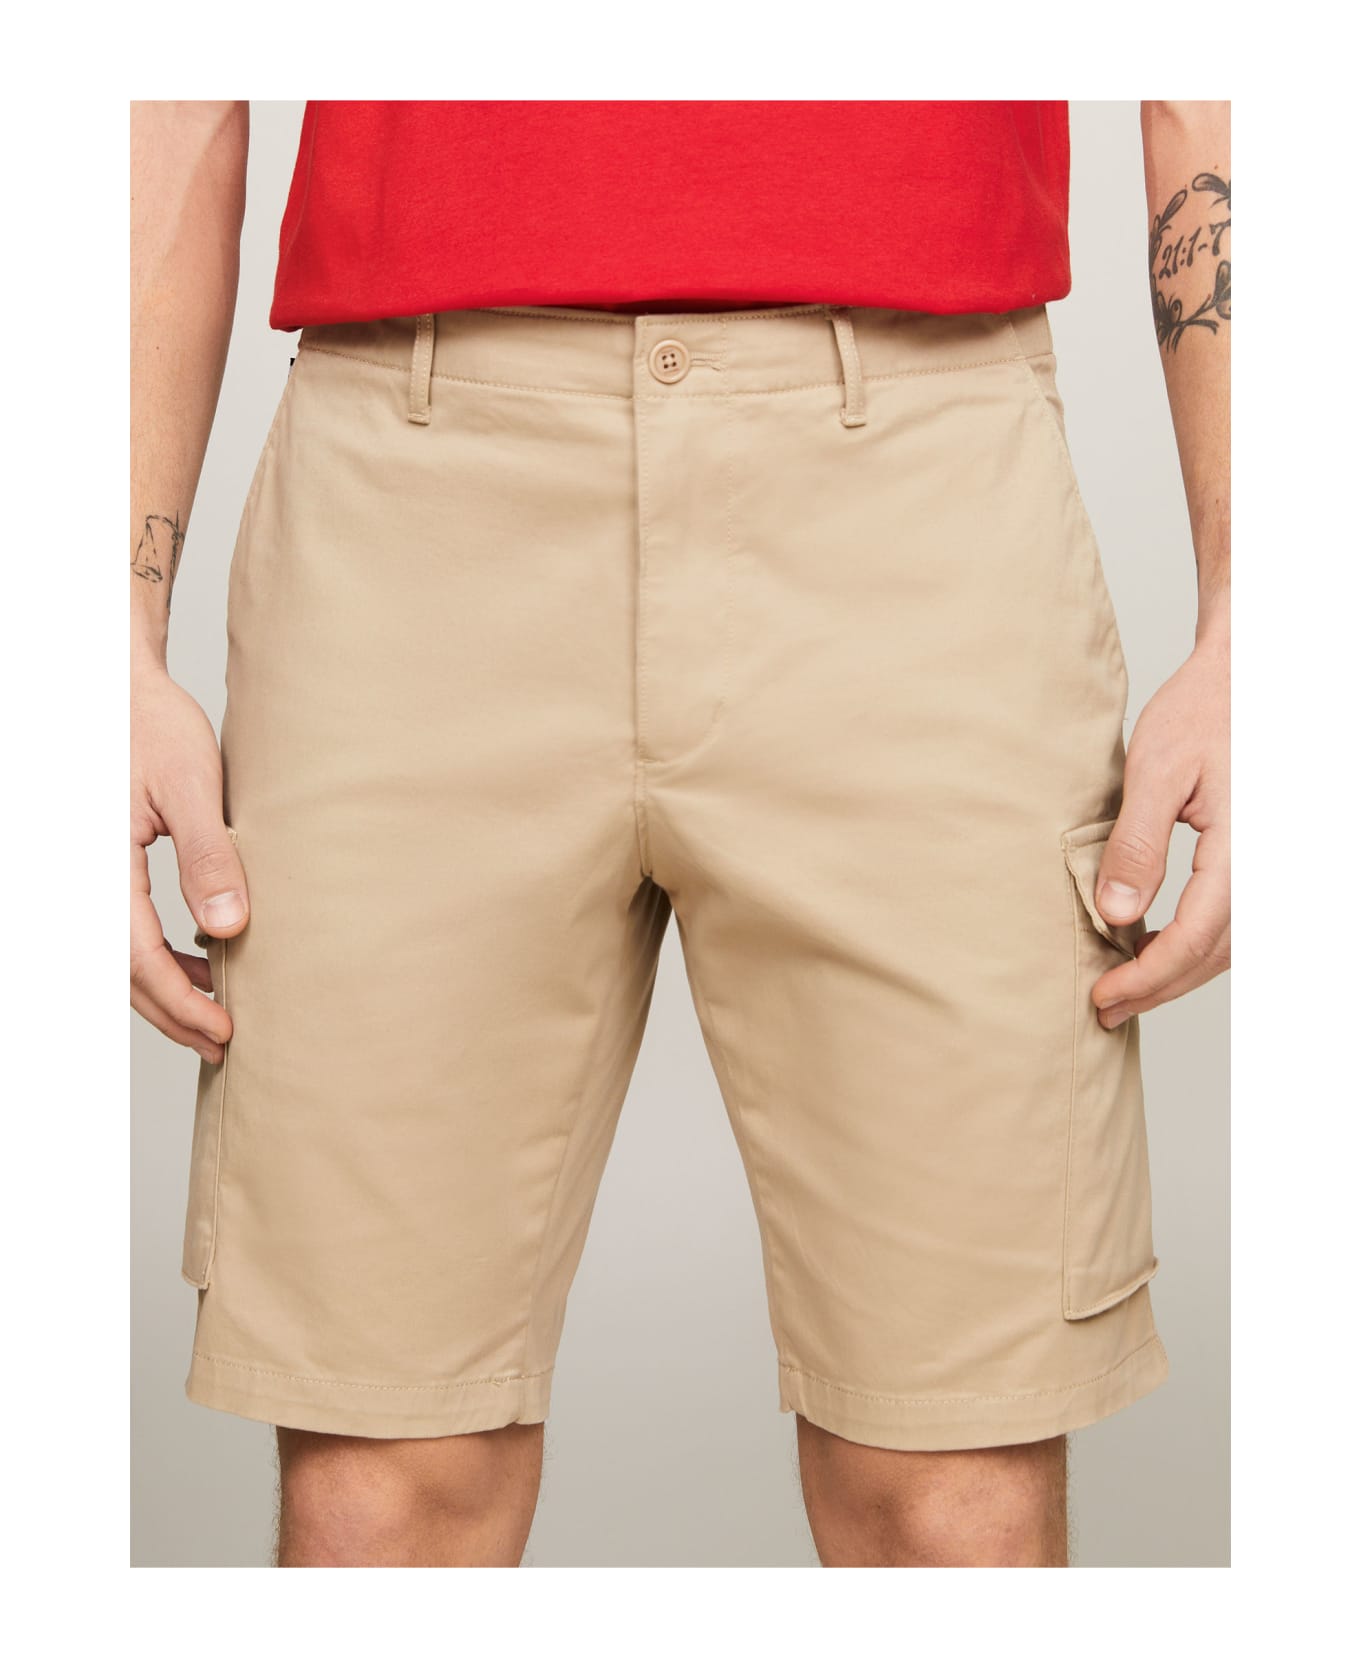 Tommy Hilfiger Khaki Men's Bermuda Shorts With Pockets - BATIQUE KHAKI